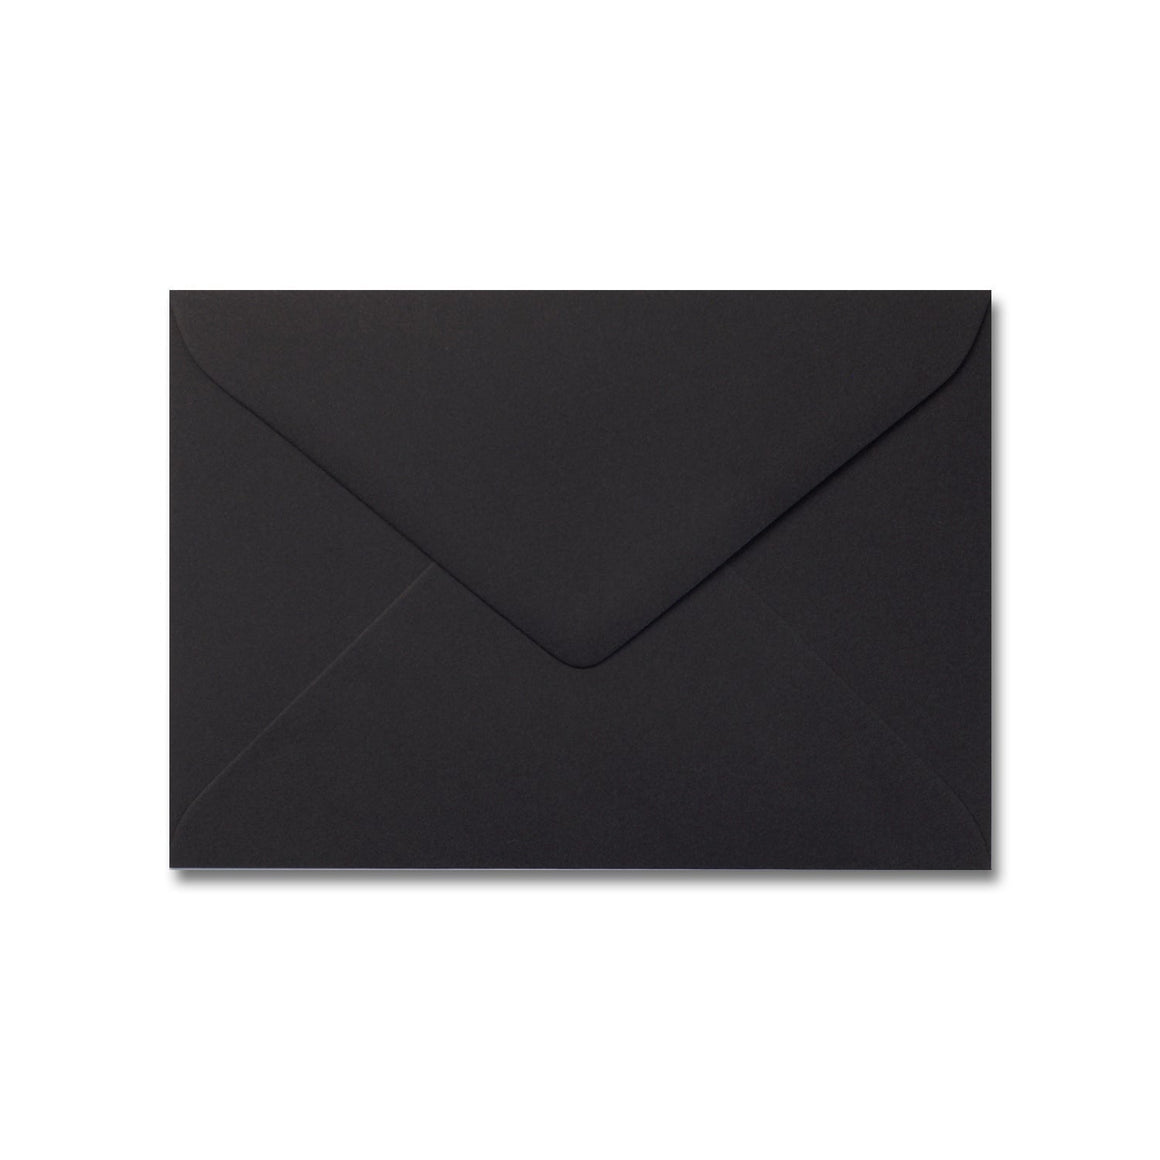 Matte Black C5 Envelope for Invitations